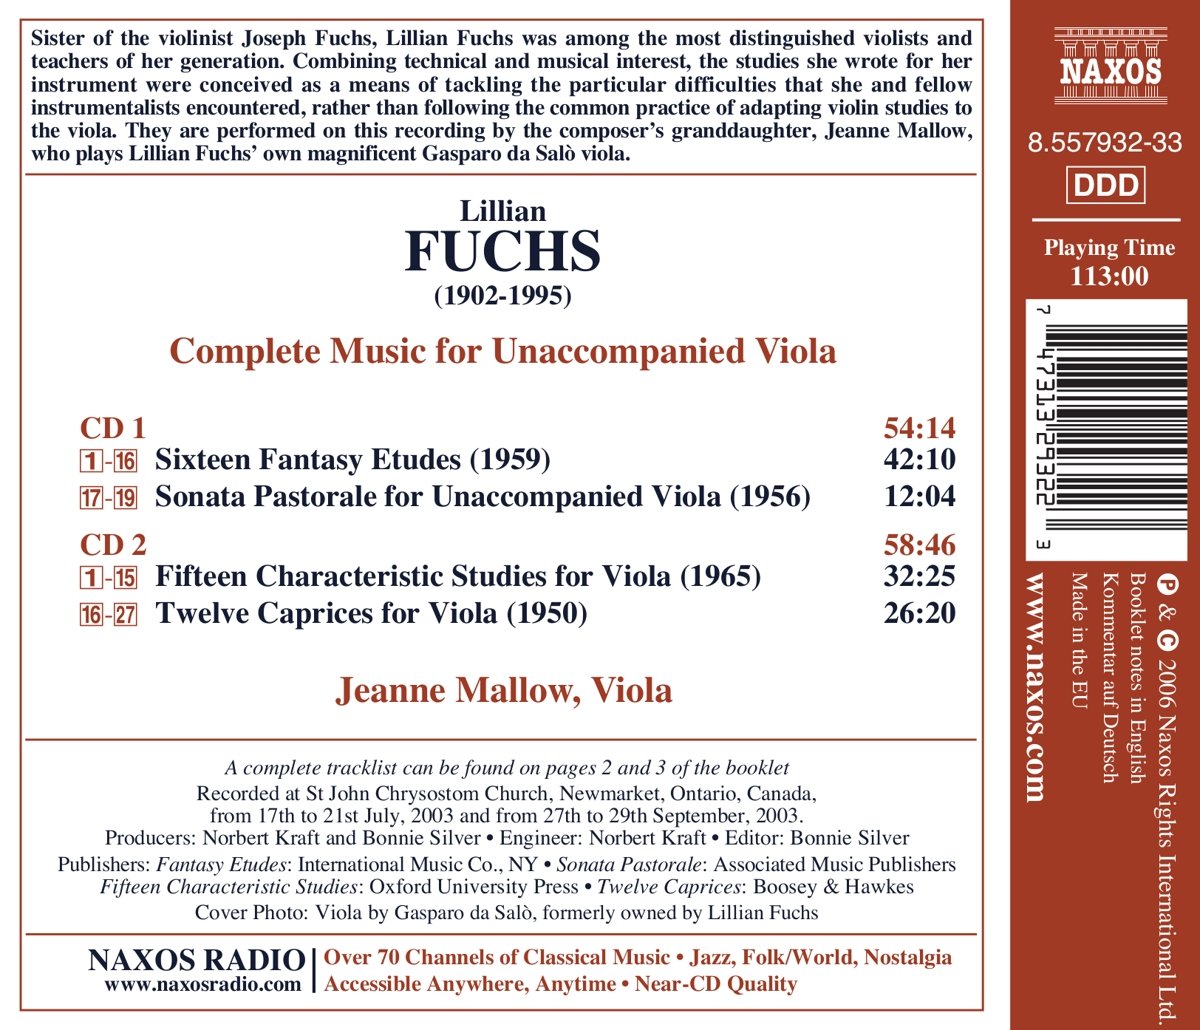 Jeanne Mallow 릴리안 푹스: 비올라 독주곡집 (Lillian Fuchs: Complete Music For Unaccompanied Viola) 